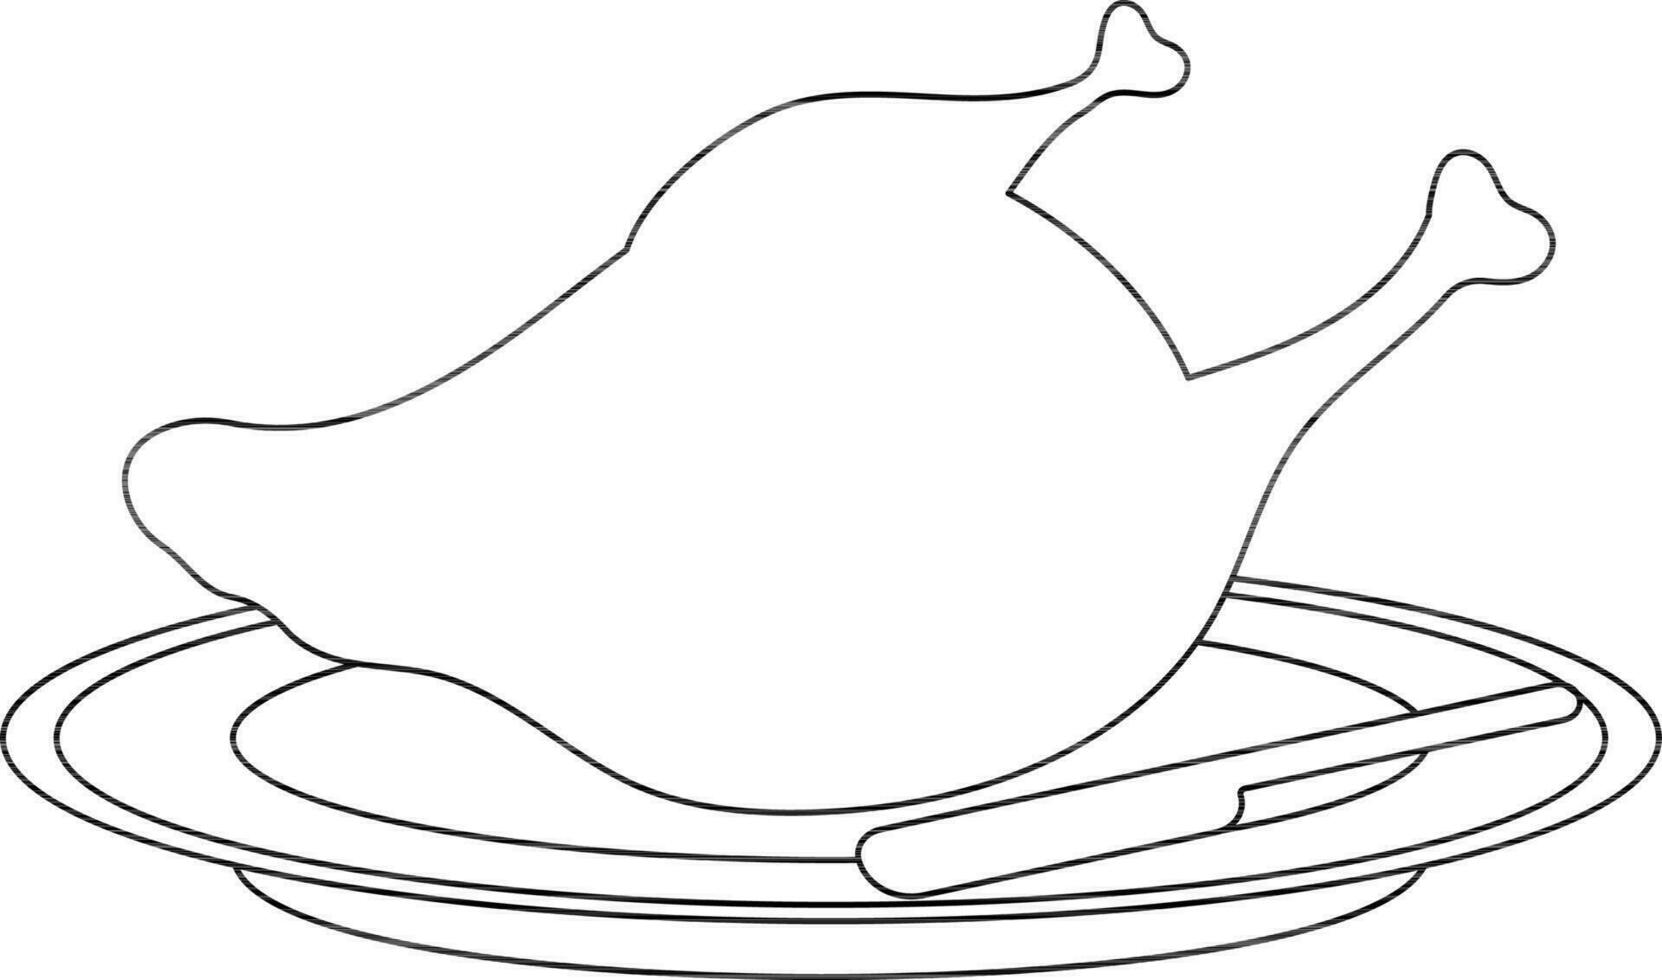 Black line art chicken on plate. vector